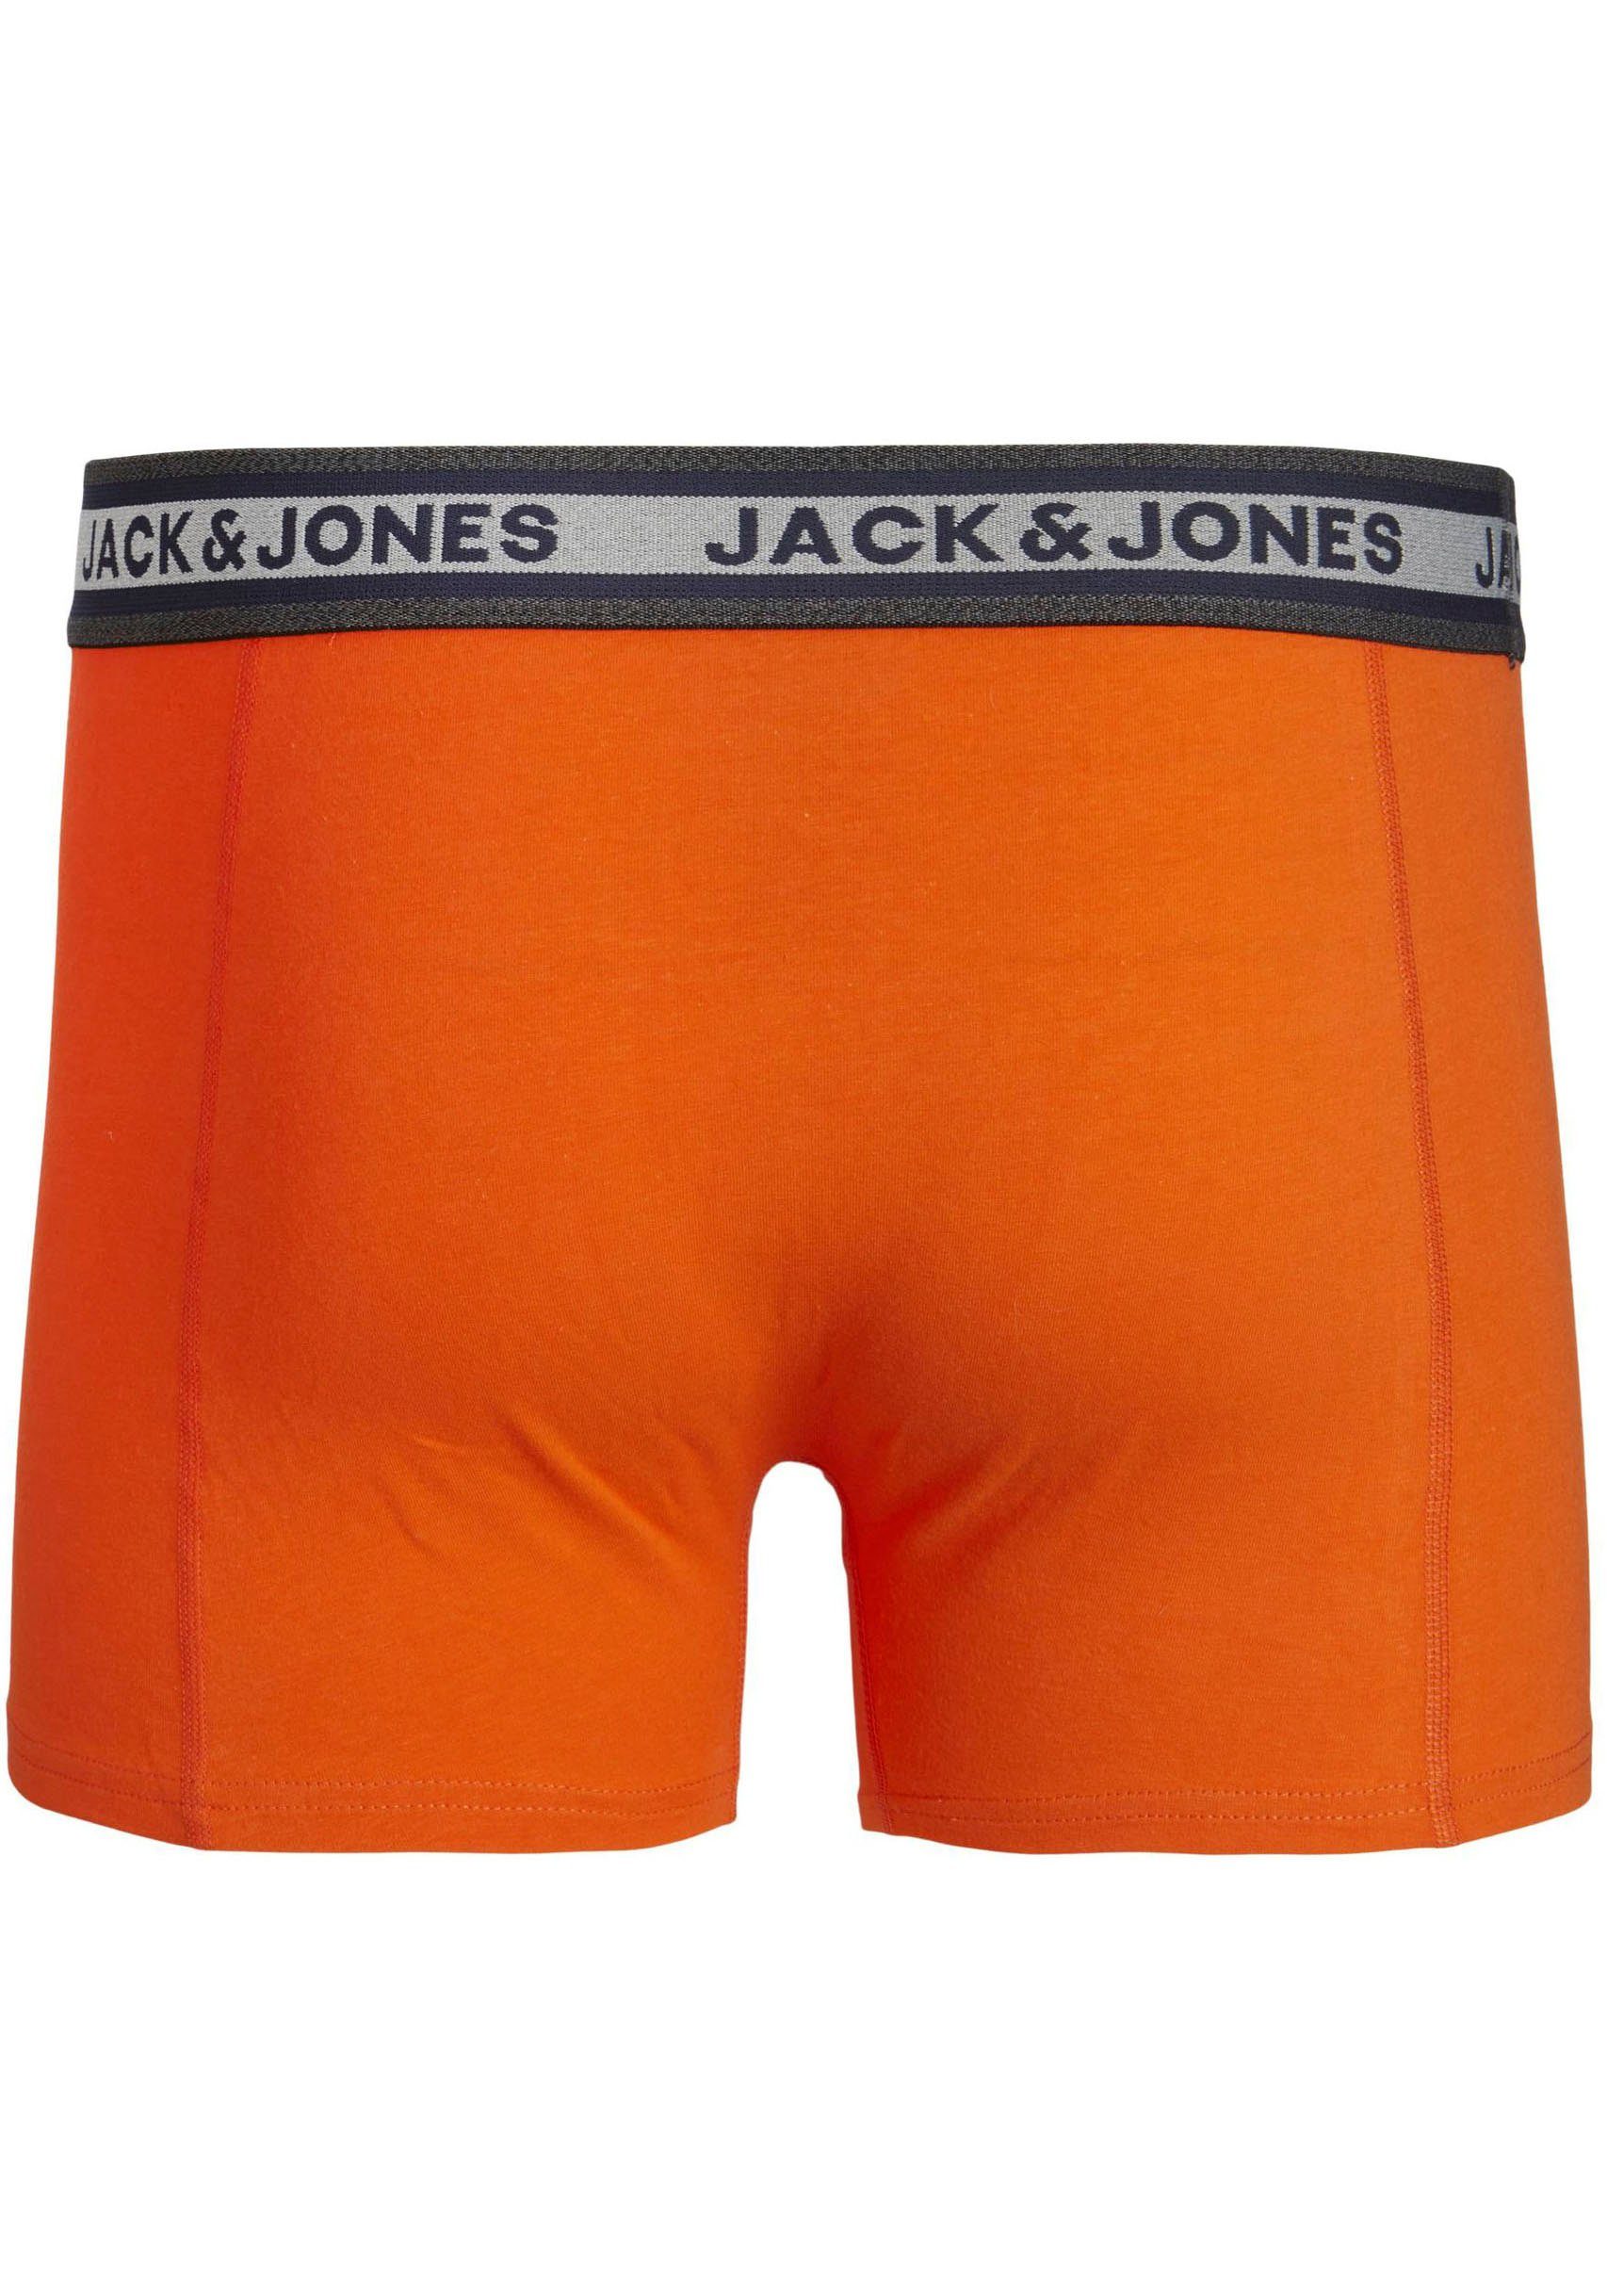 Jones exub / navy / JACMYLE & NOOS dgm Jack 3 TRUNKS (Packung, Trunk PACK blazer 3-St)